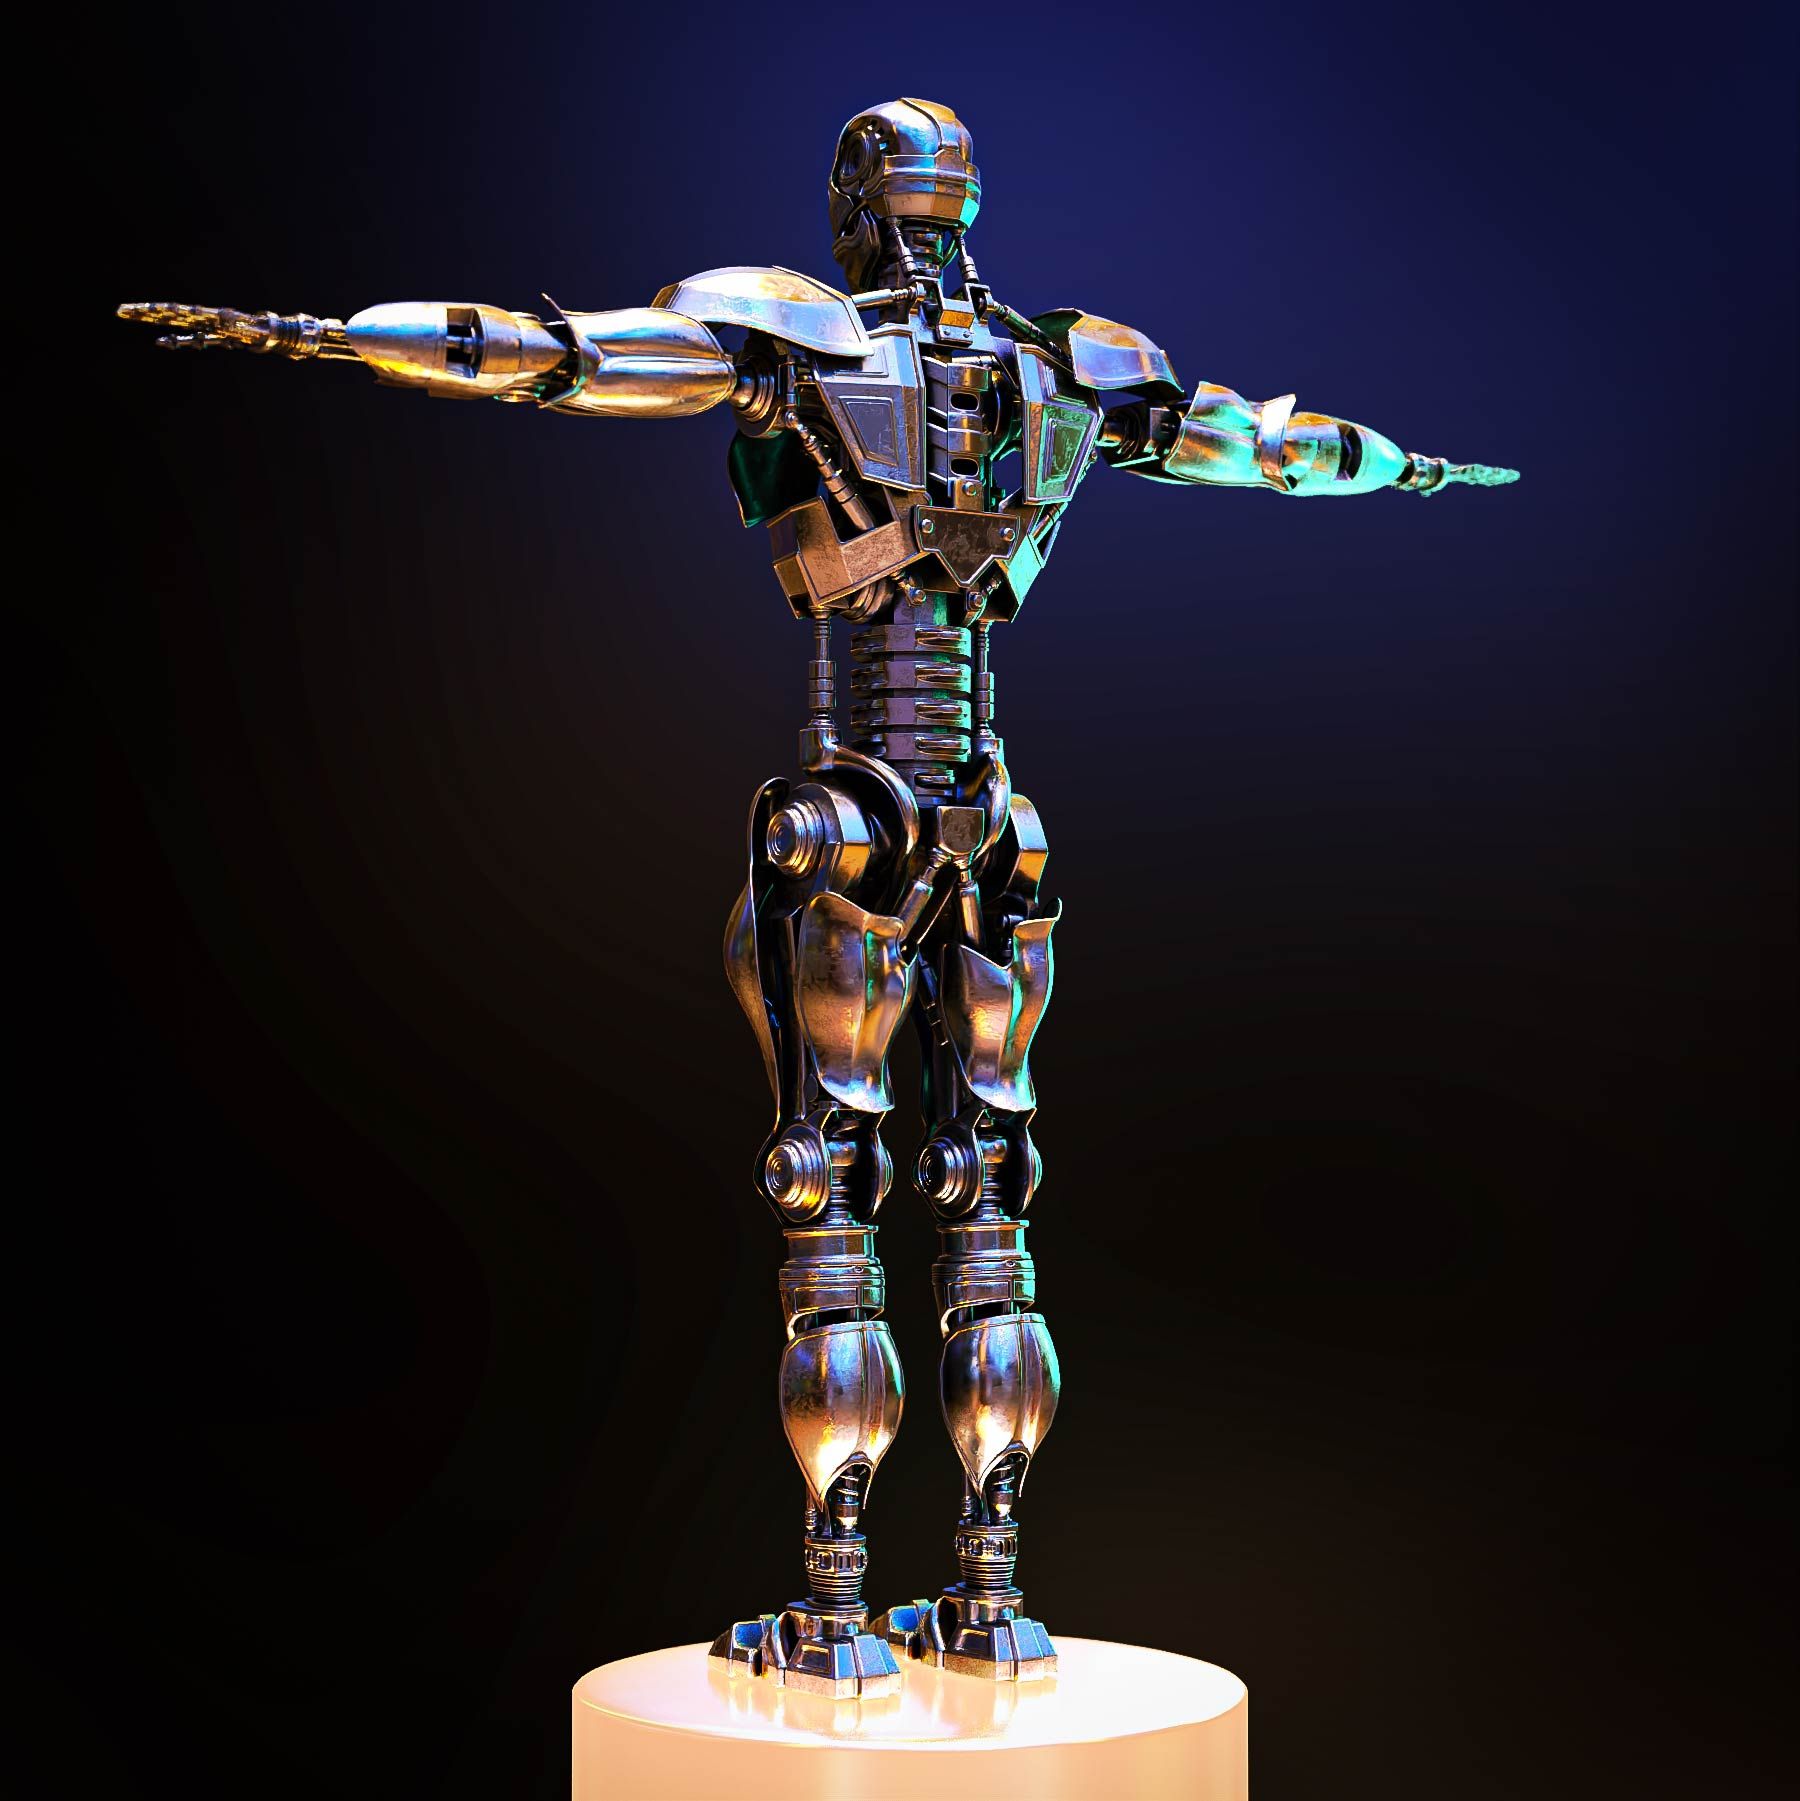 Lifelike-Rigged-Terminator-3D-Model---Battle-Ready-Robotics-and-AI